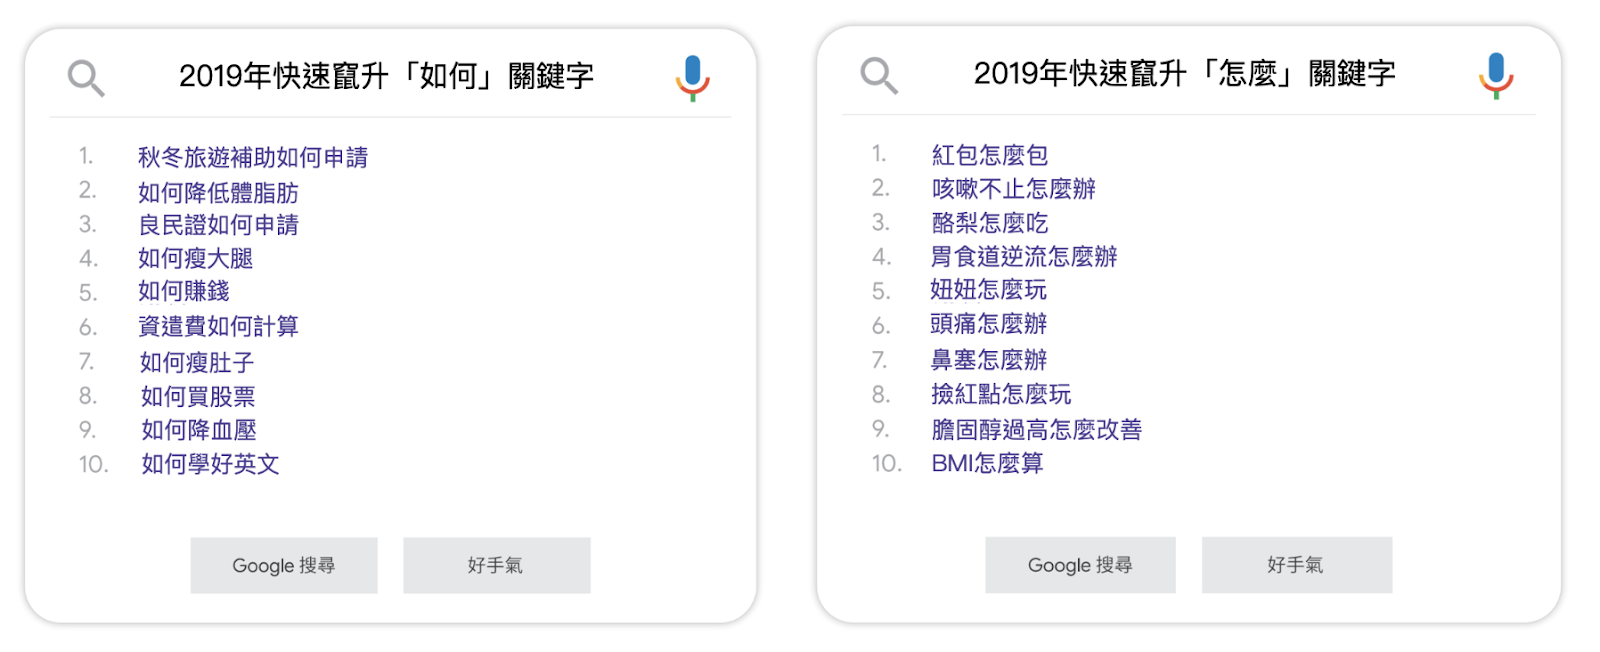 SEO - Google 2019 年度搜尋排行榜大公開